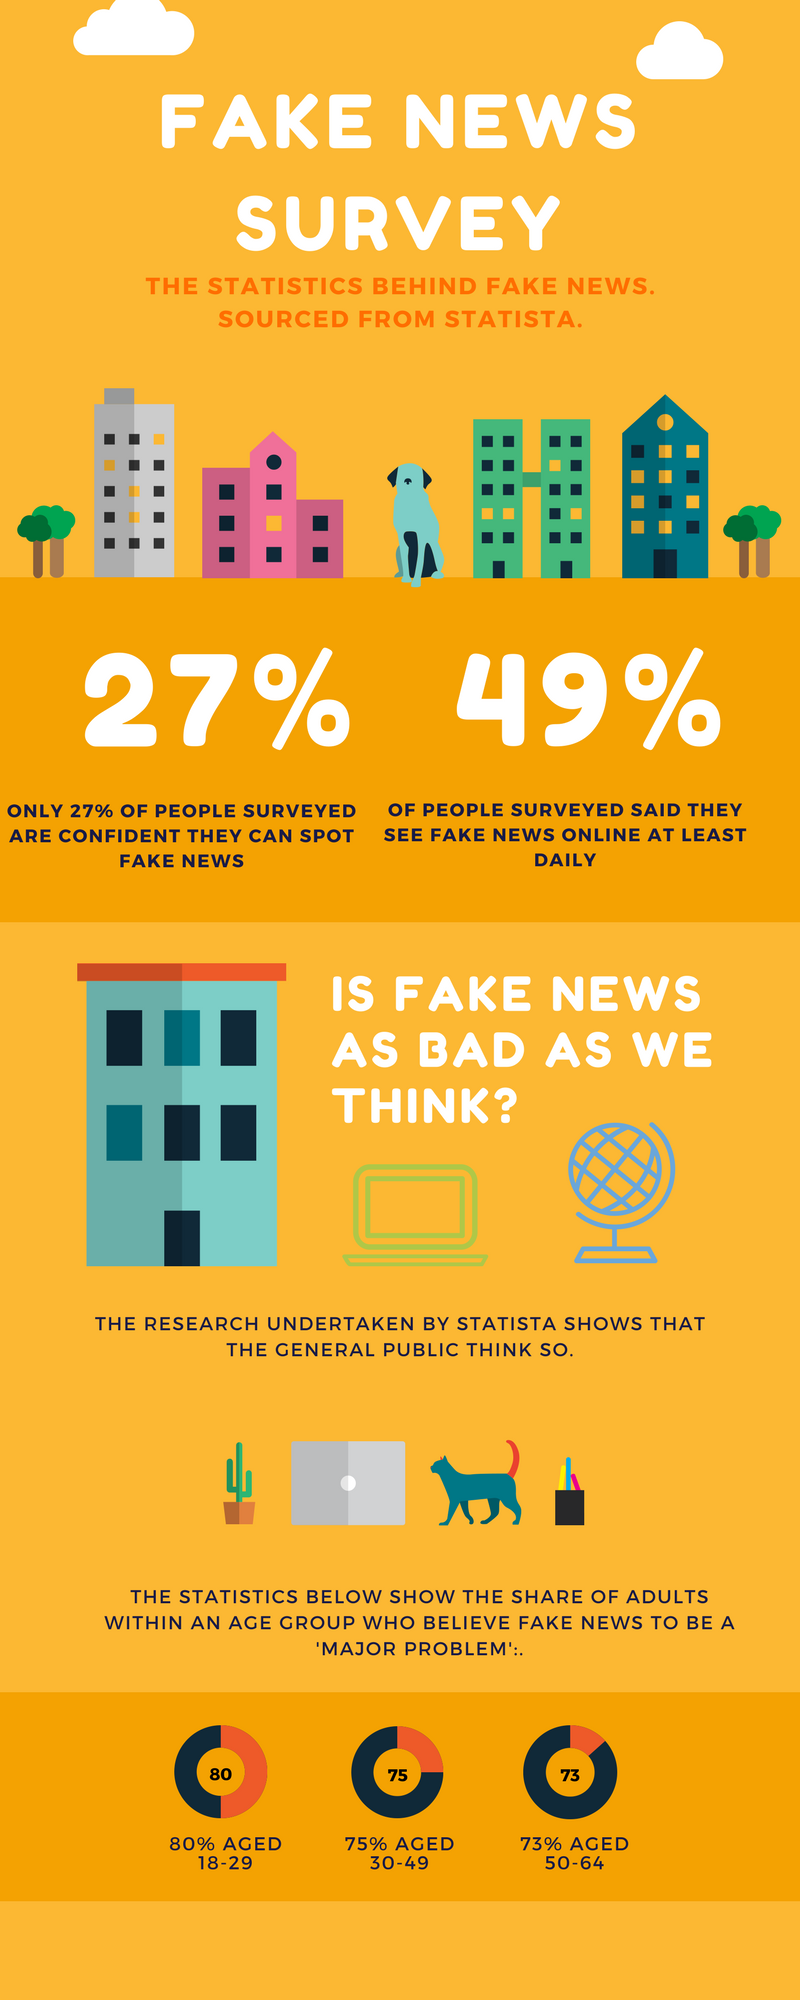 Fake news survey topic one